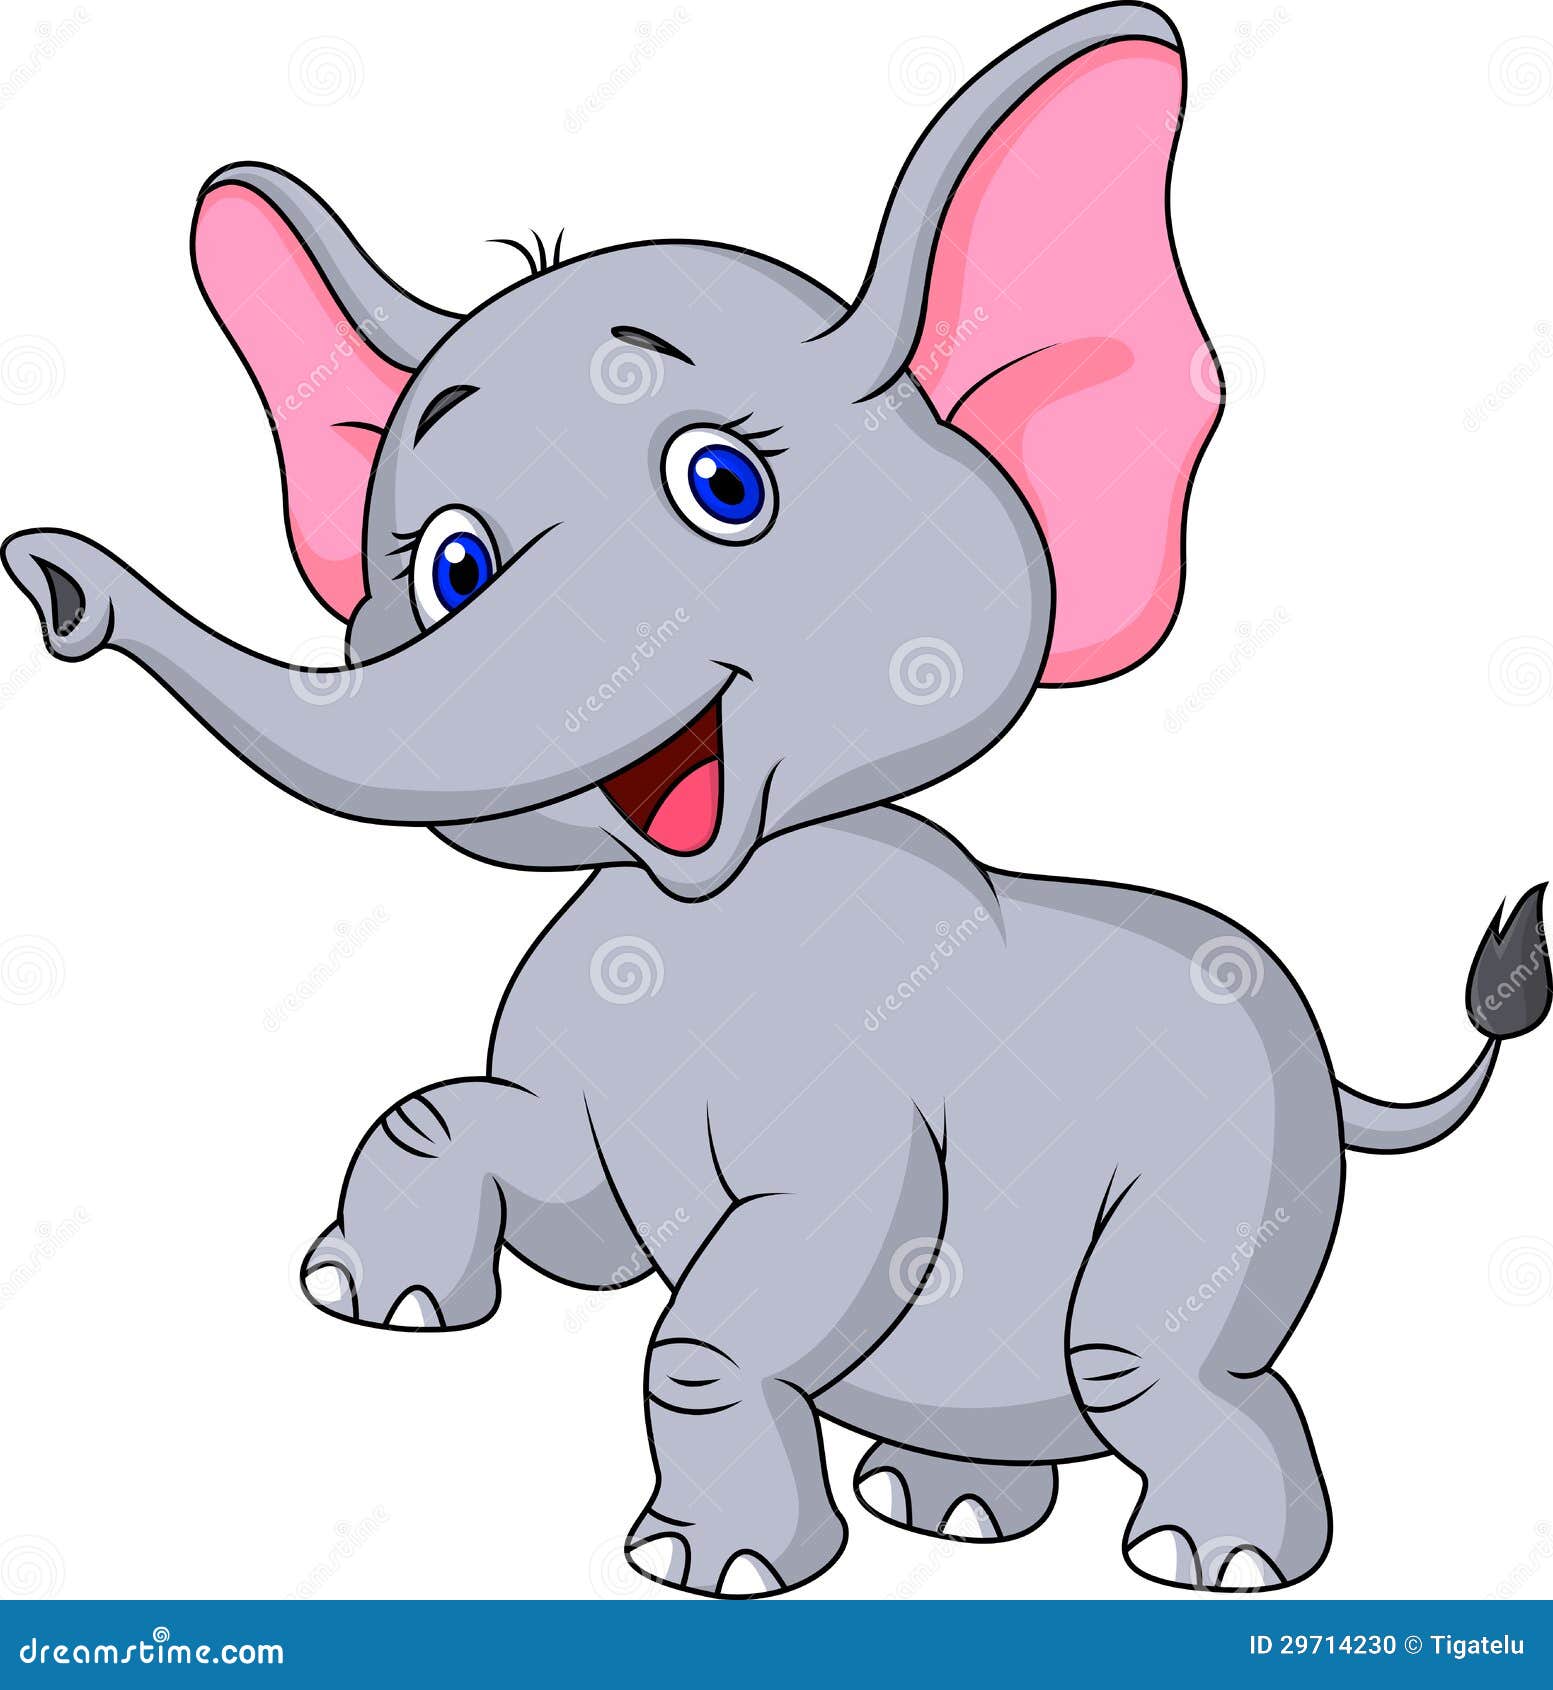 Cute Elephant Cartoon Stock Photo  Image: 29714230